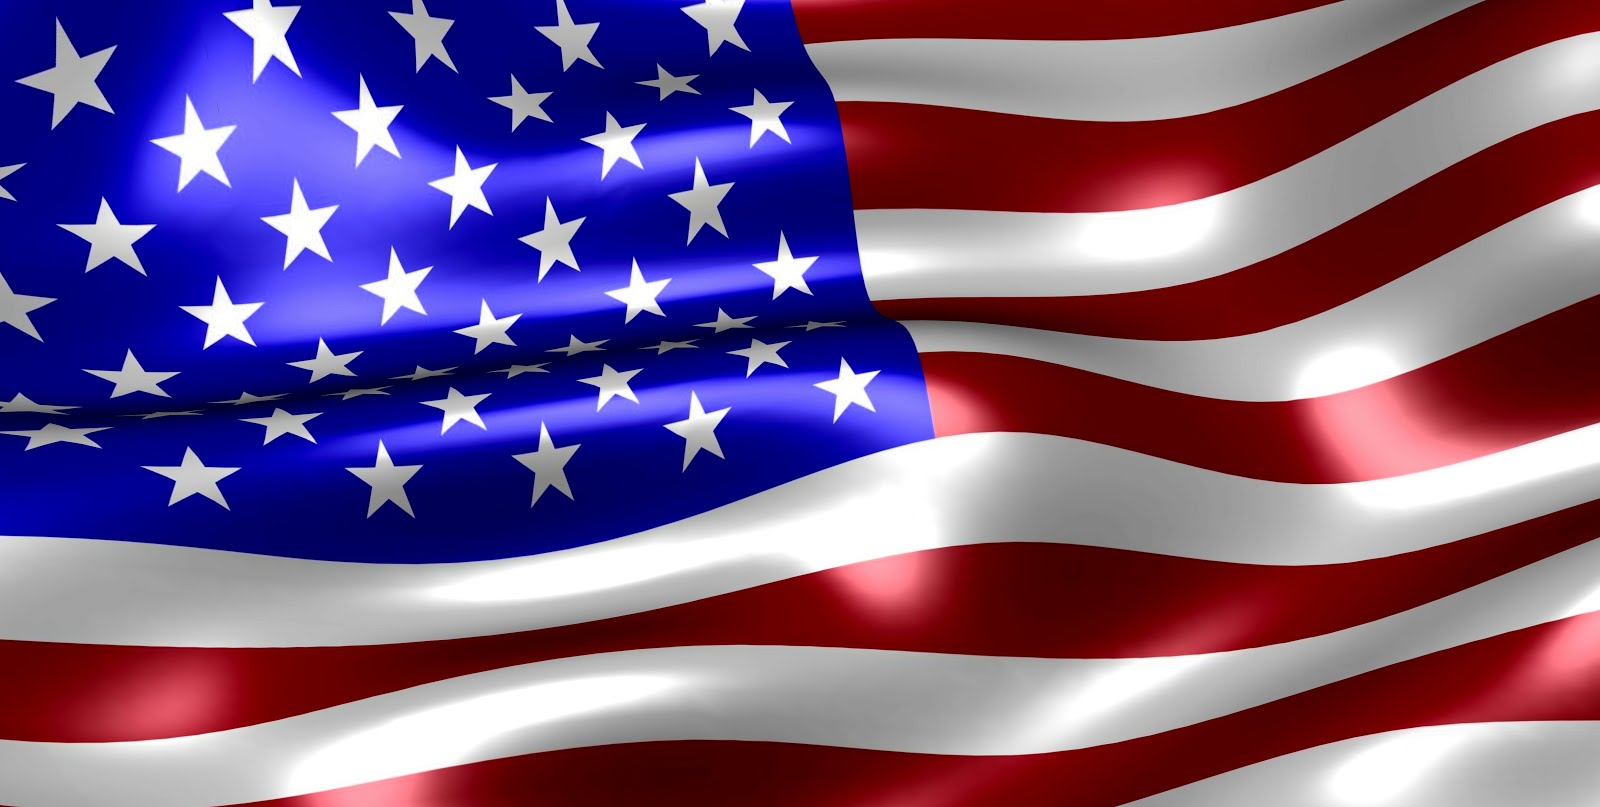 File:Visual of USA Flag stars